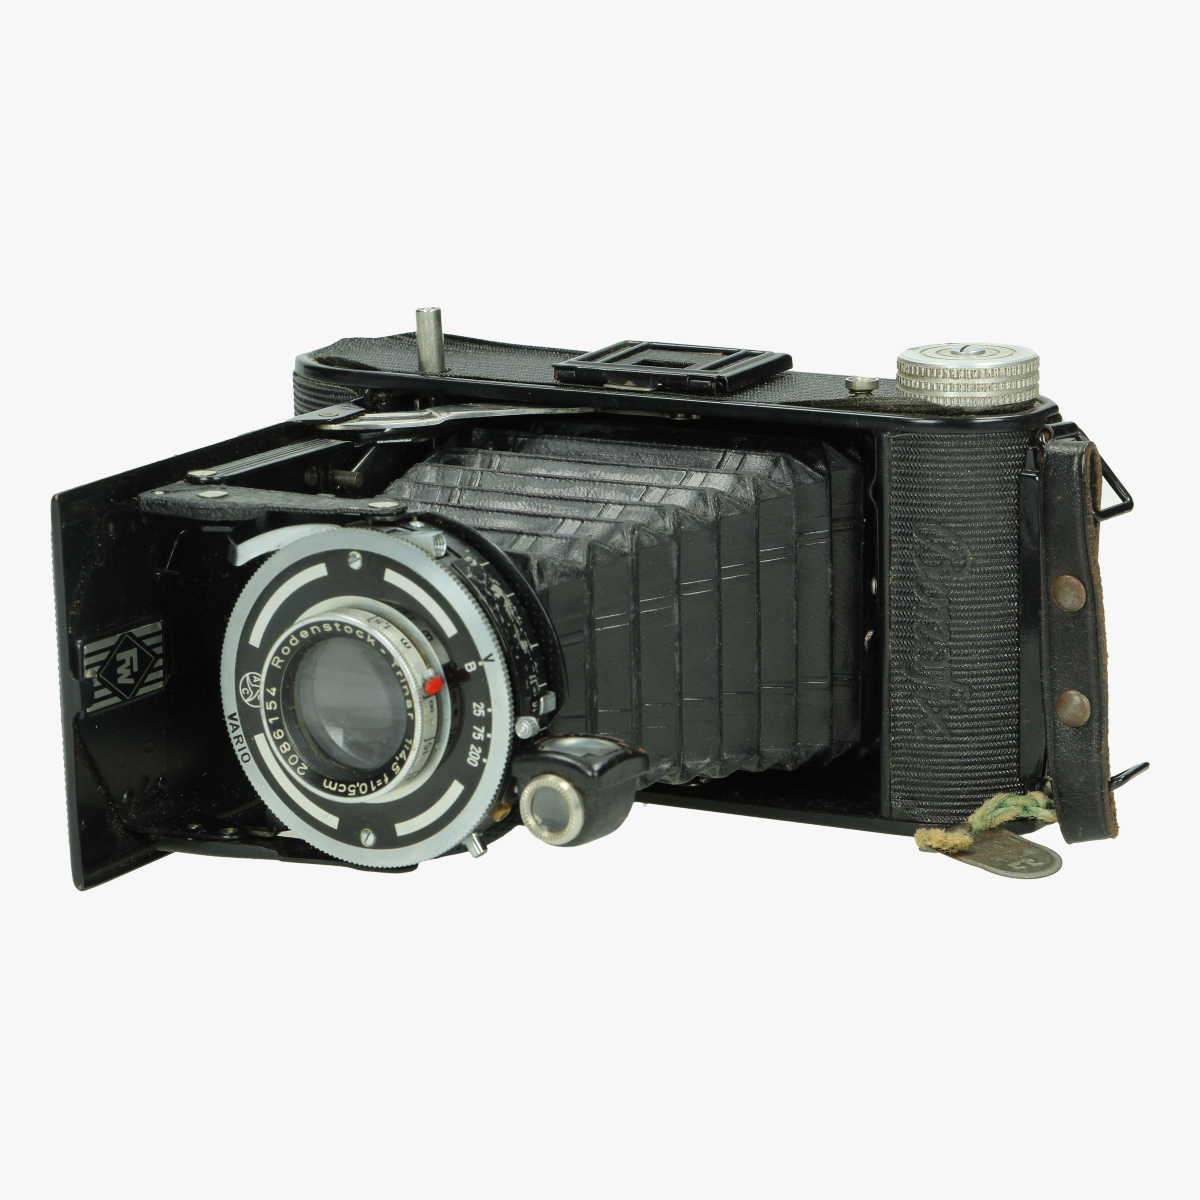 Afbeeldingen van fotocamera bomafix rodenstock trinar vario 